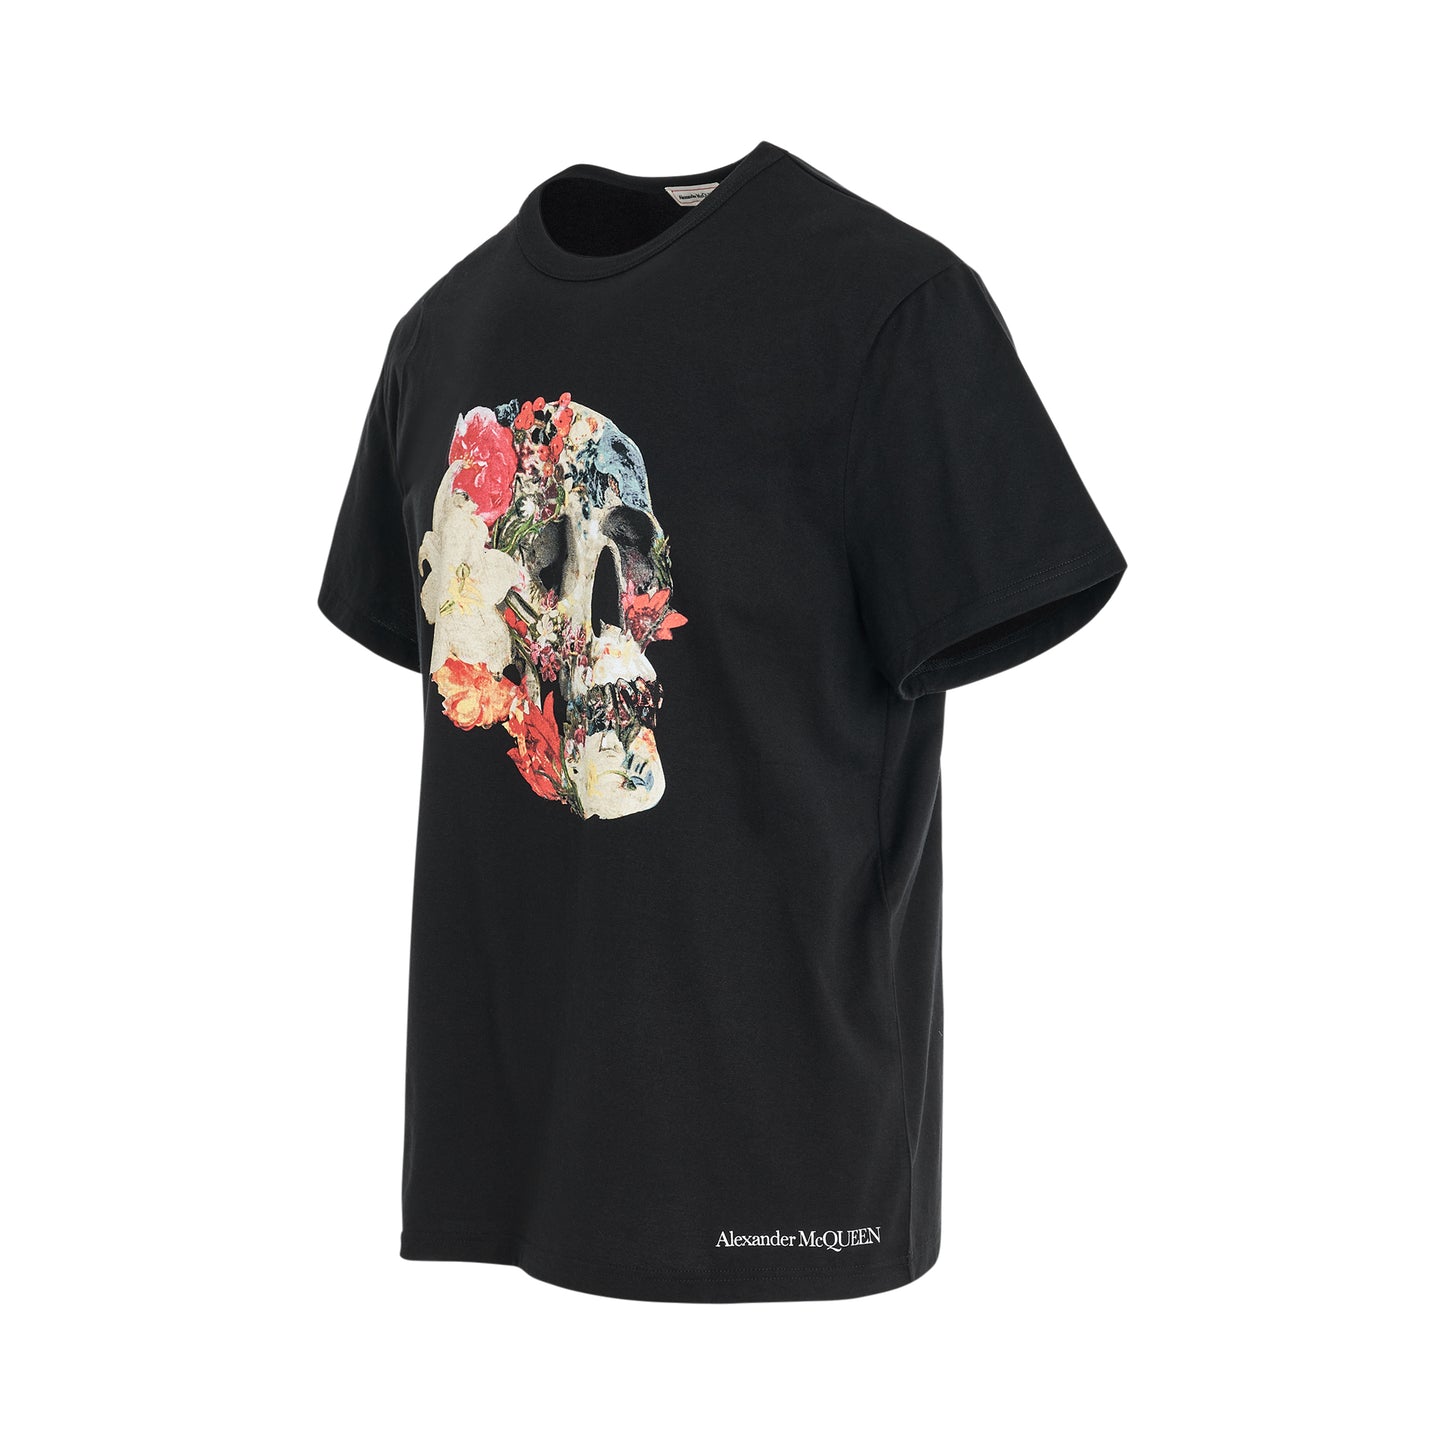 Floral Skull Print T-Shirt in Black/White/Red